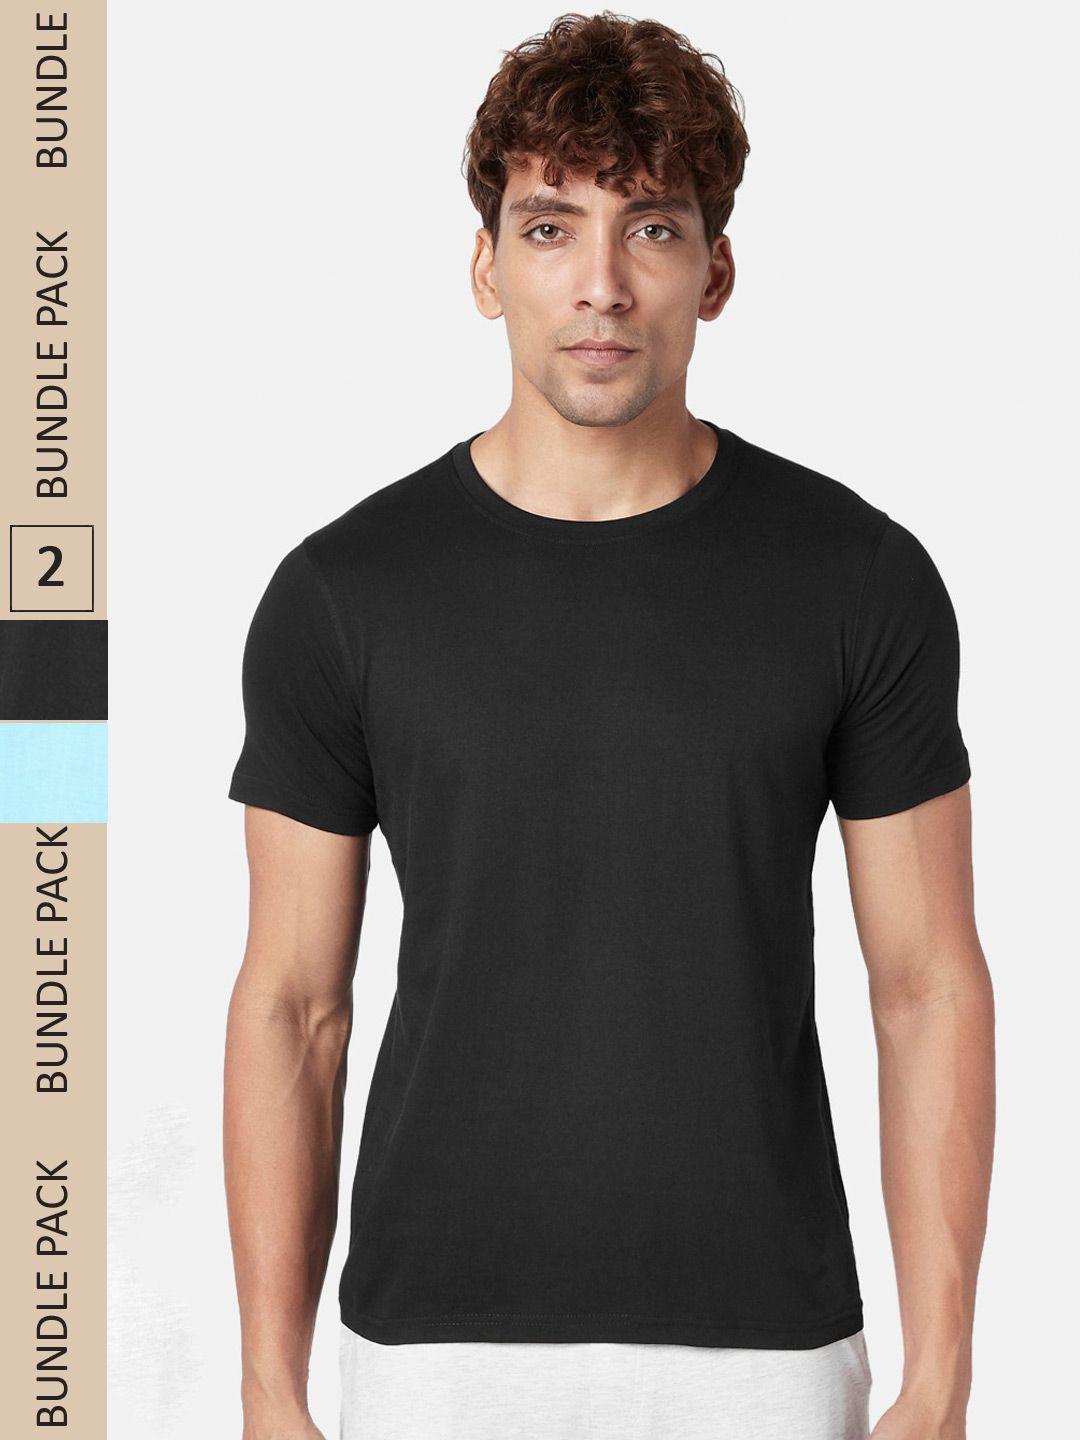 ajile by pantaloons men black typography 2 t-shirt